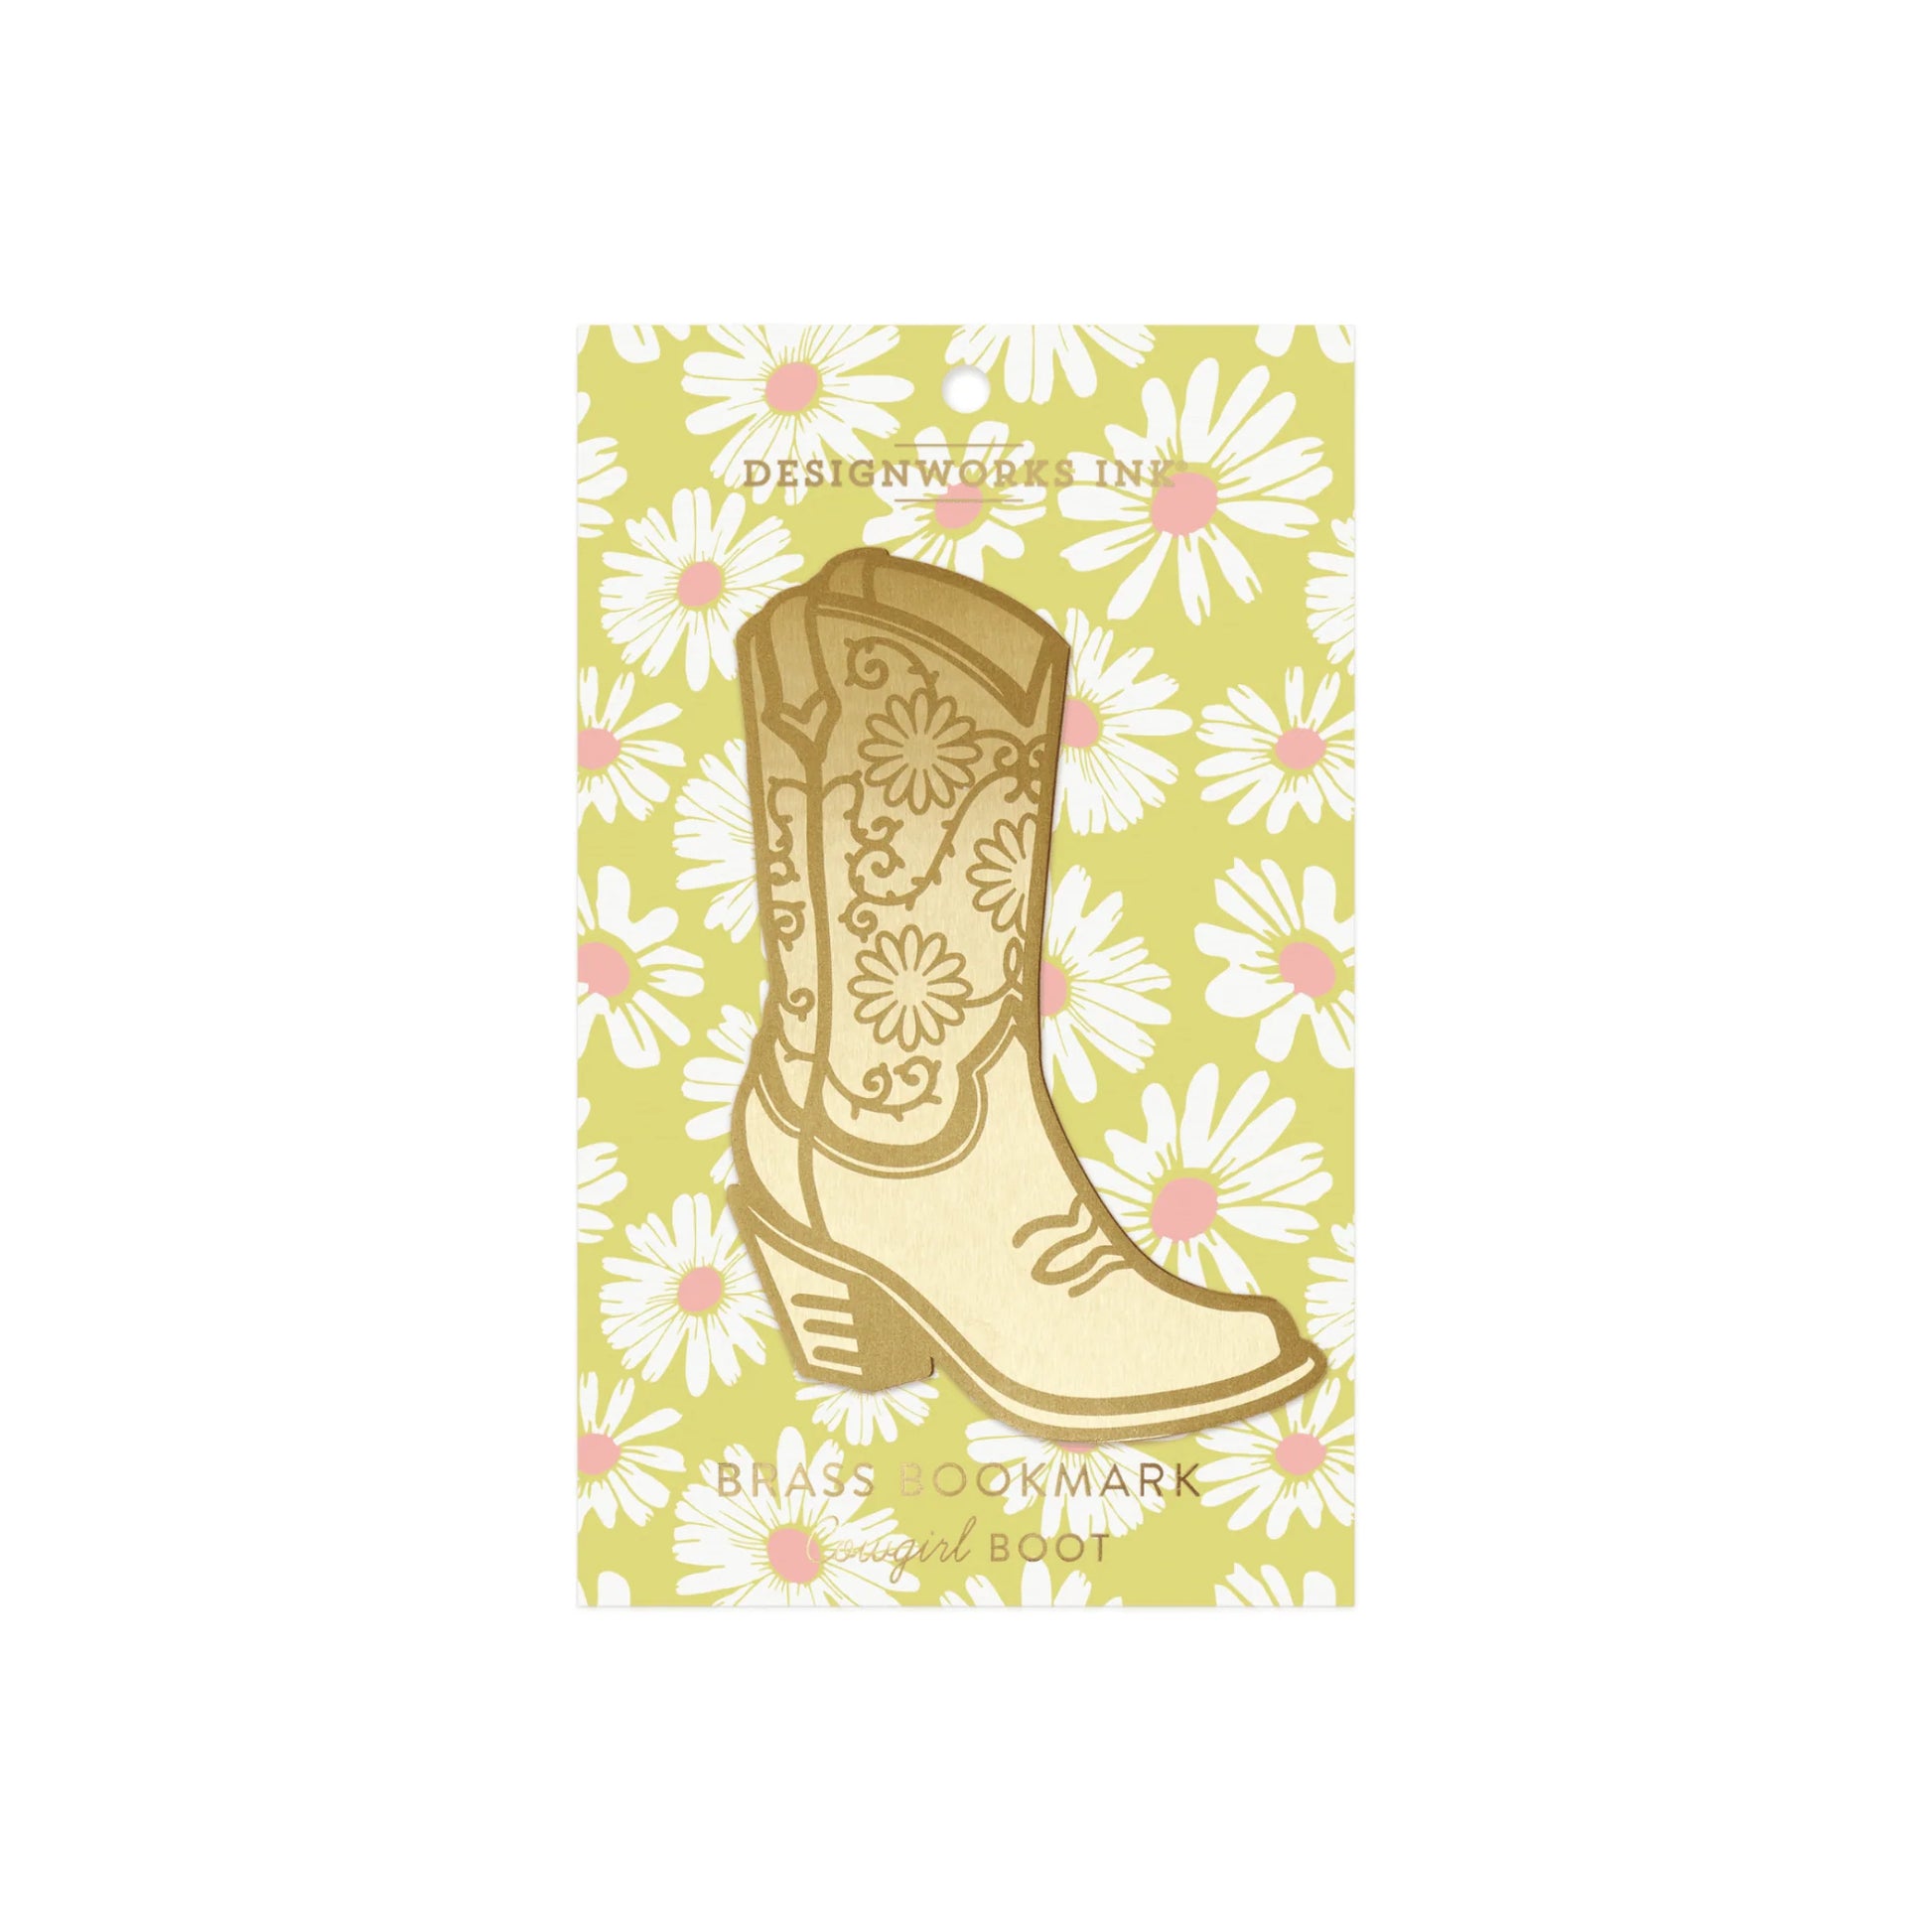 Designworks Brass Bookmarks cowgirl boot 